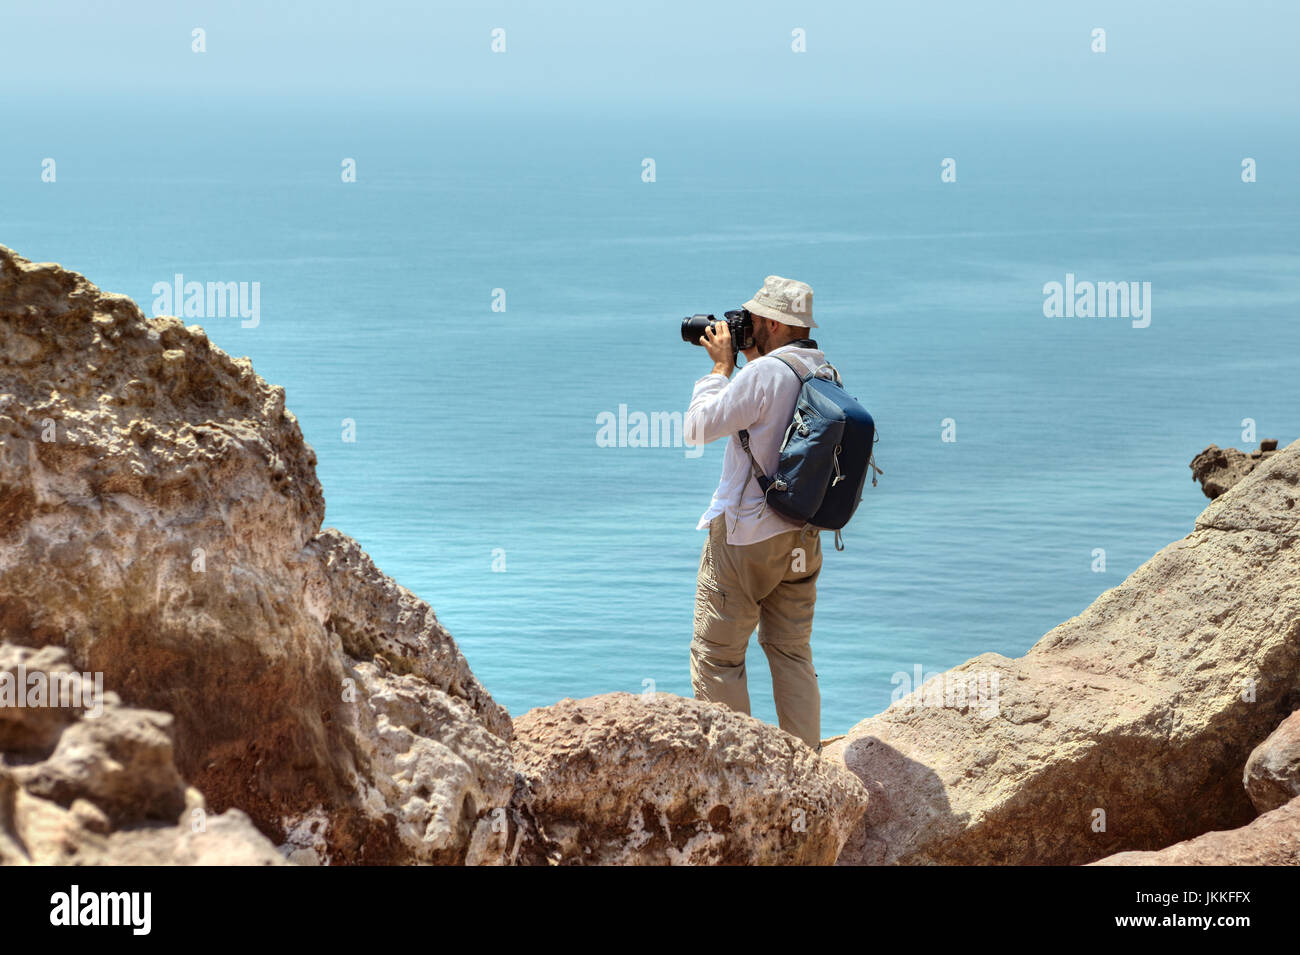 Panama iran -Fotos und -Bildmaterial in hoher Auflösung – Alamy